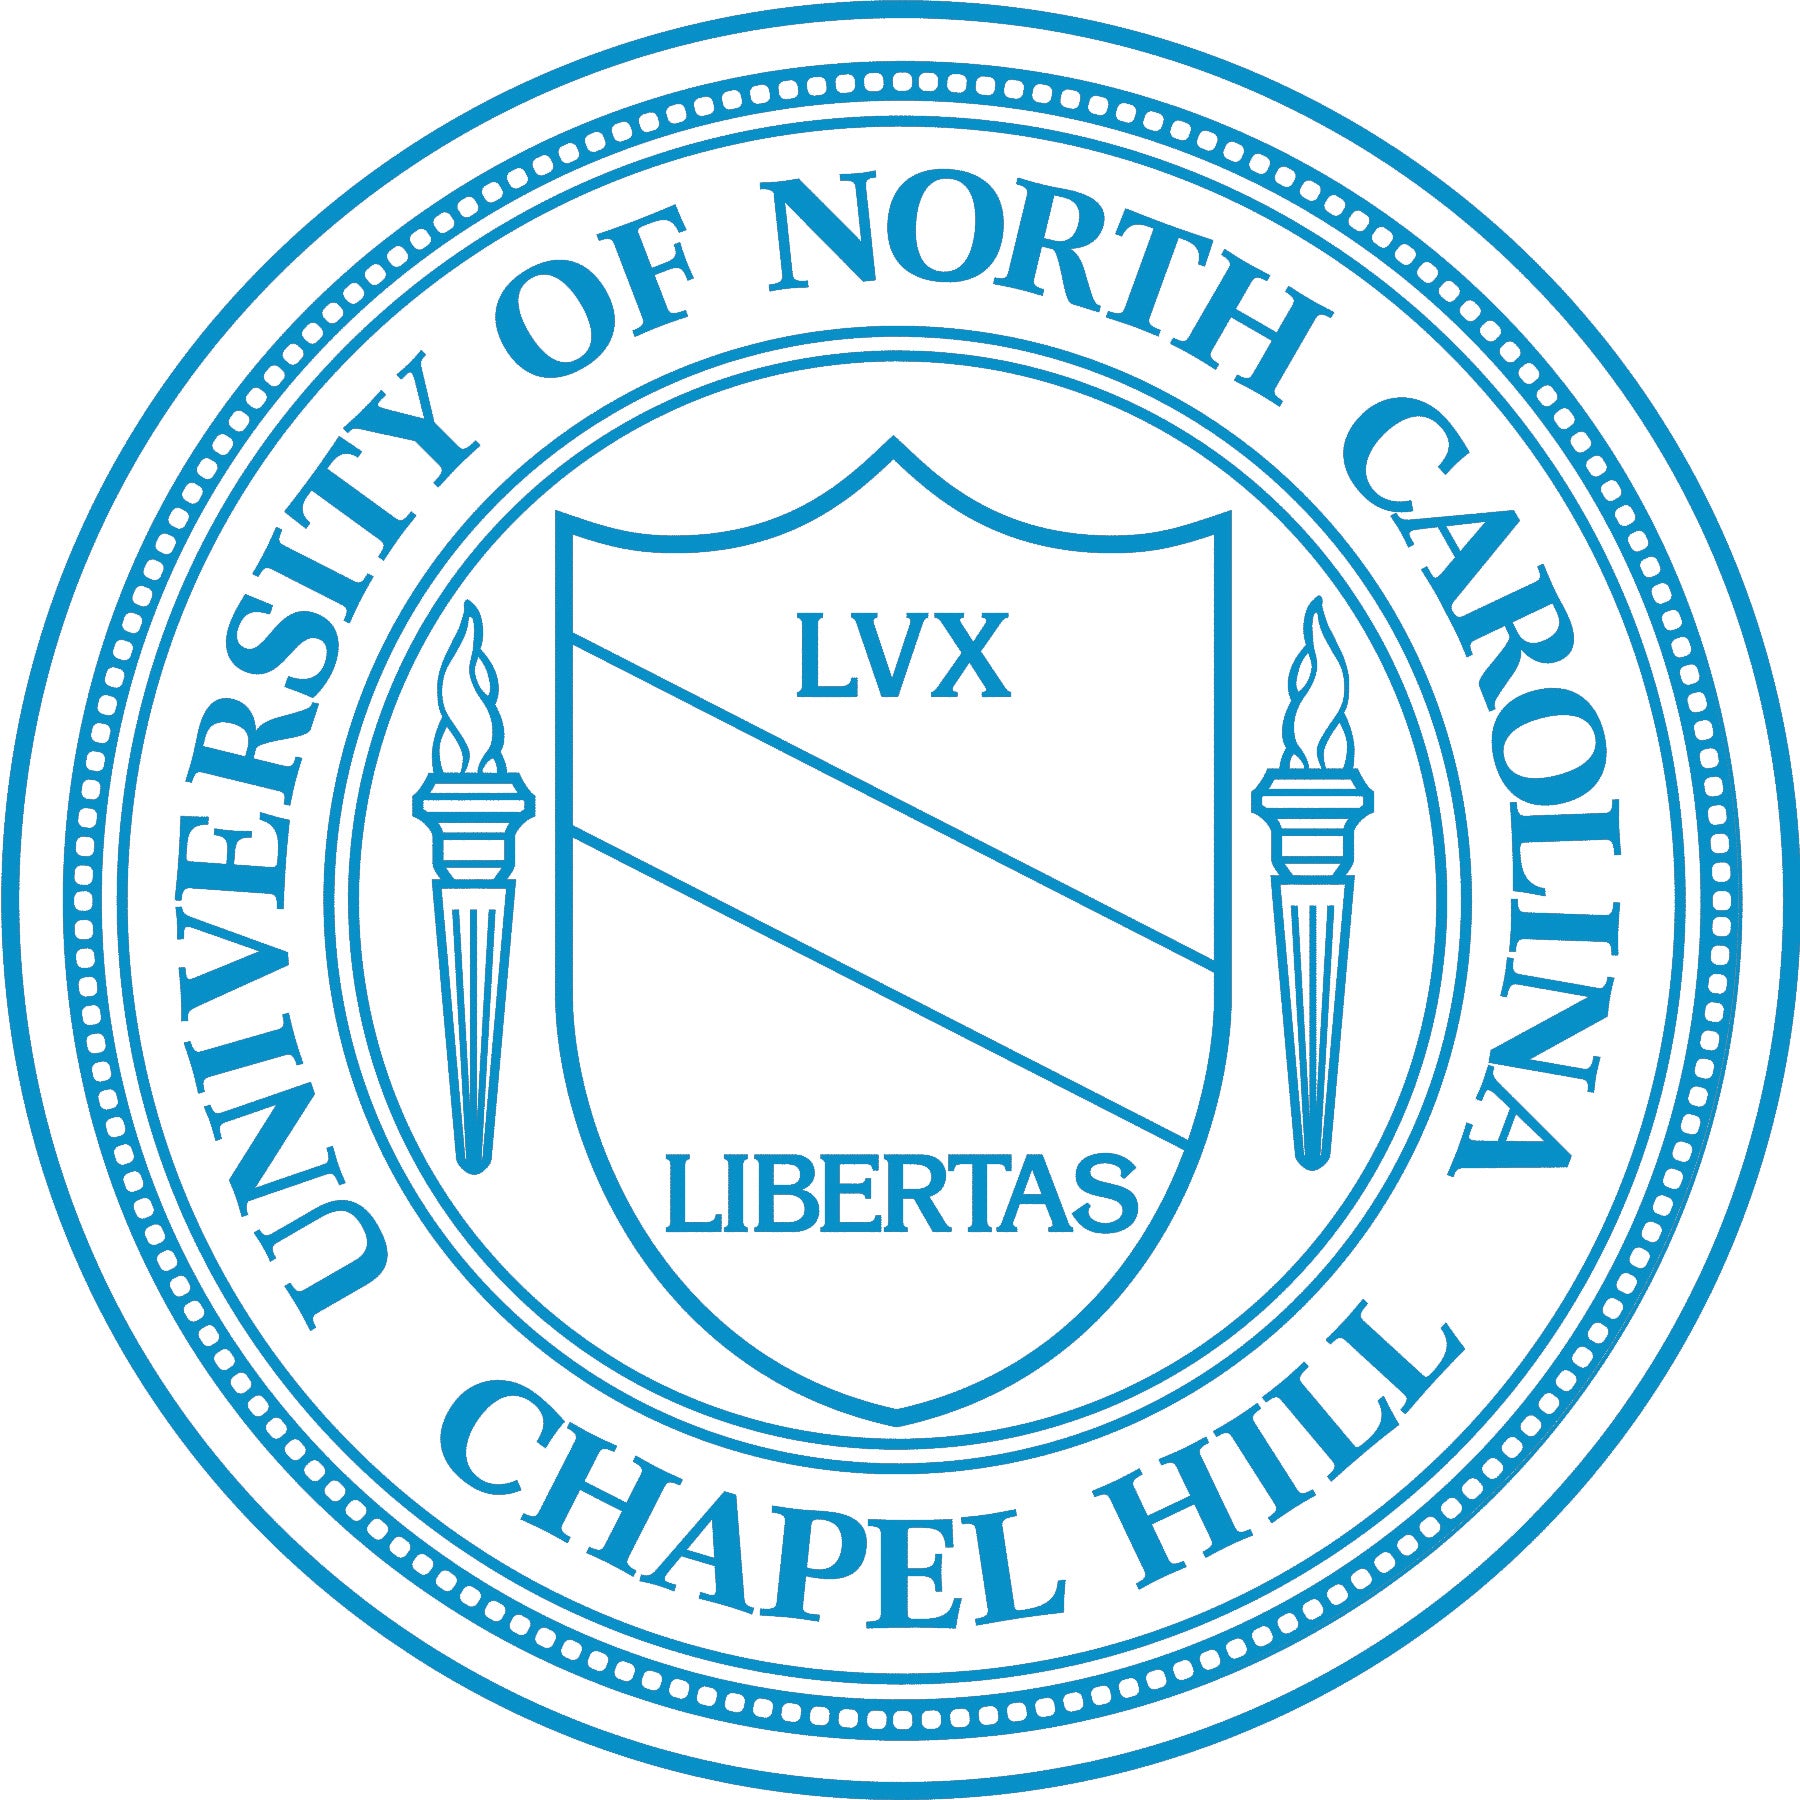 University of North Carolina Ladies Accessories, University of North  Carolina Ladies Gifts, Pins